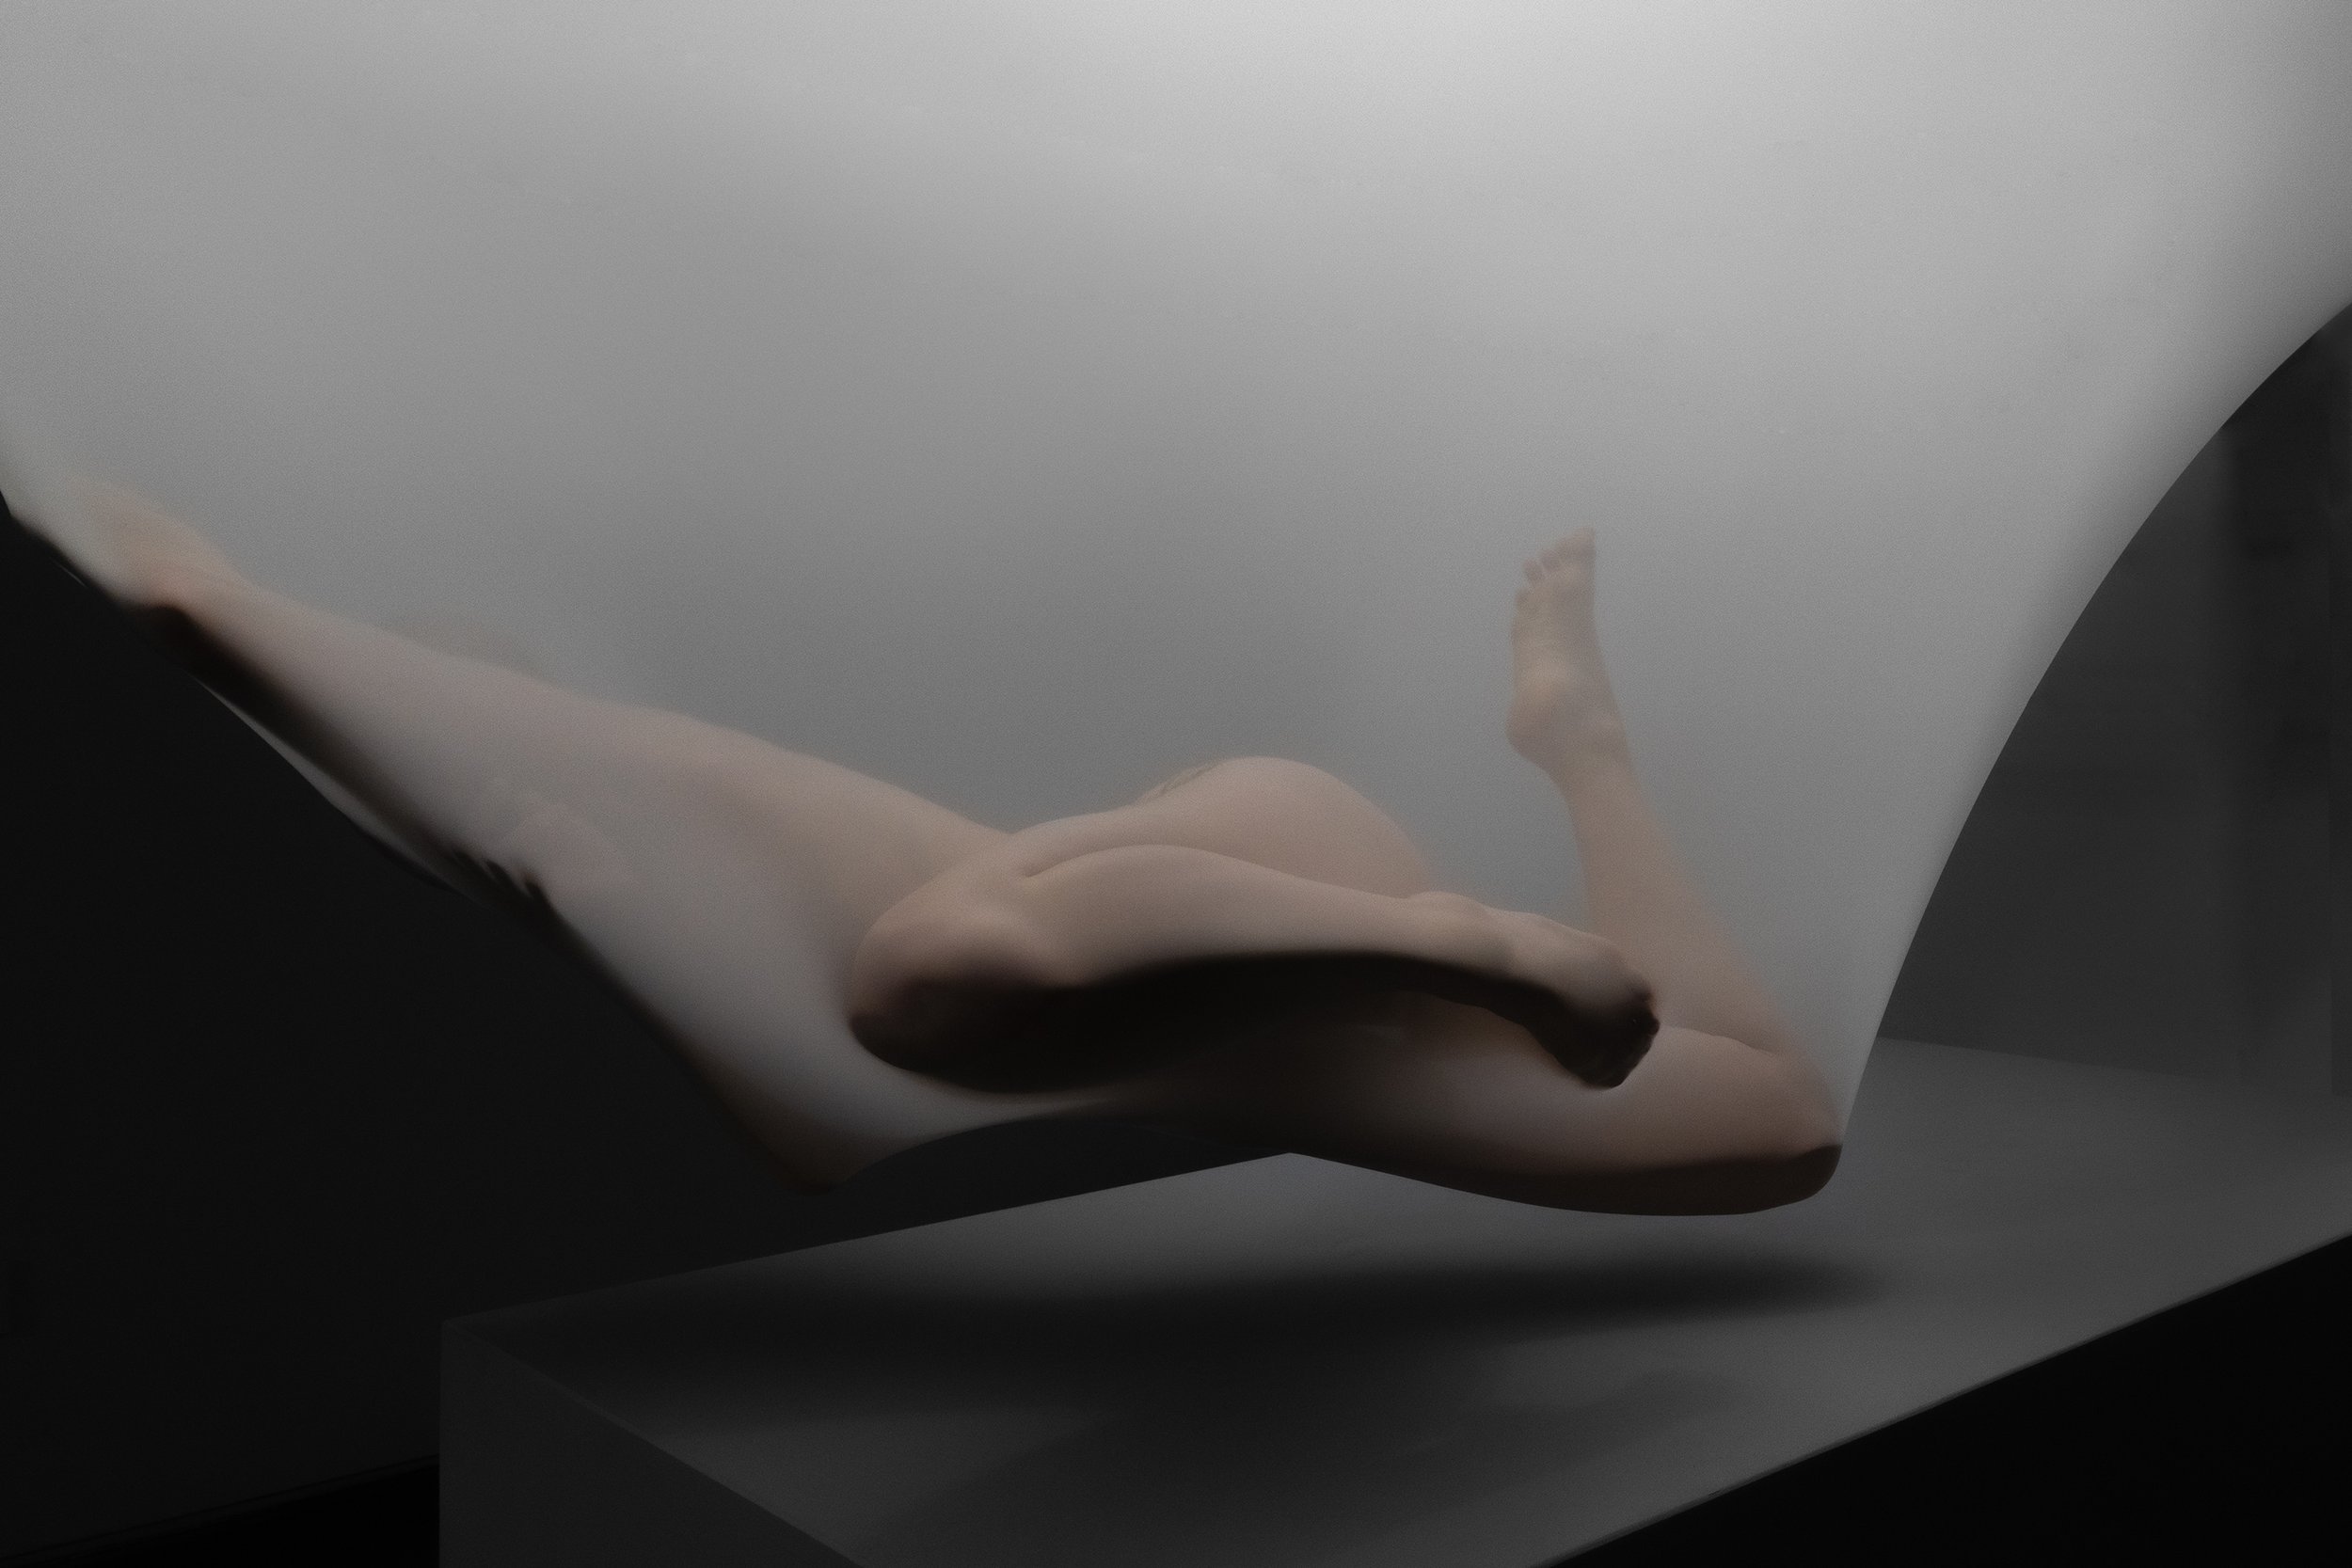 9.Malin-Bülow-Levitation#2-Piero-Atchugarry-Gallery-Pablo-Atchugarry-Foundation.jpg